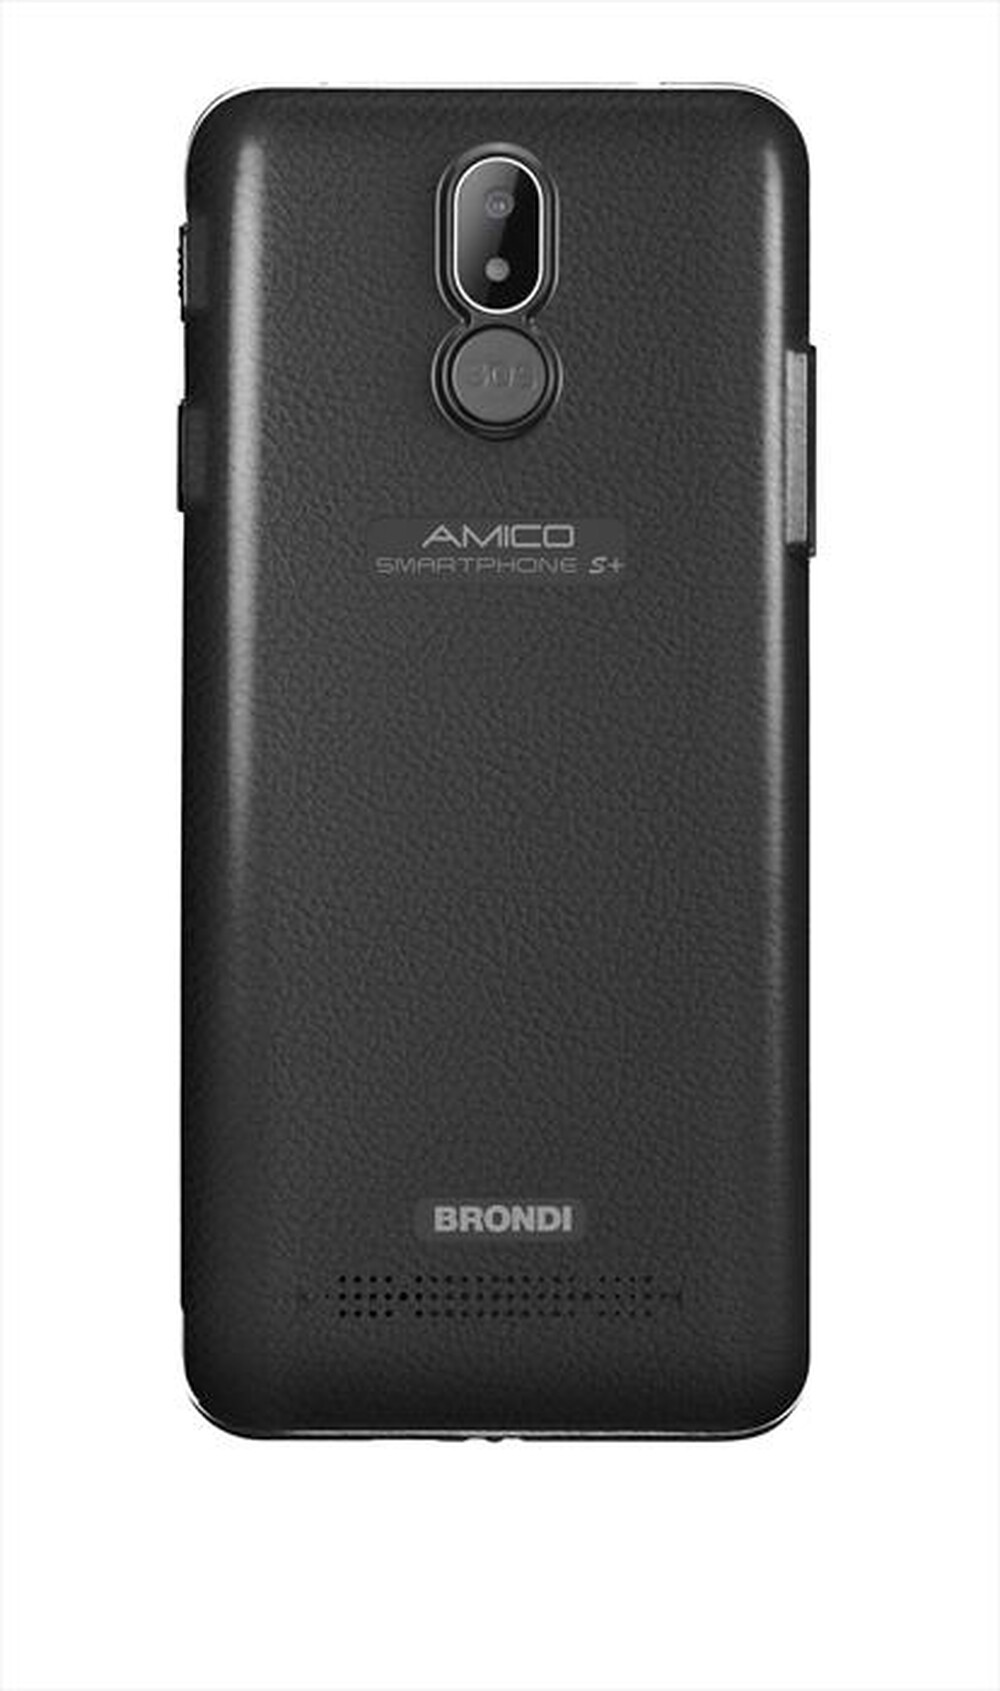 "BRONDI - Bar phone AMICO SMARTPHONE S+-NERO"